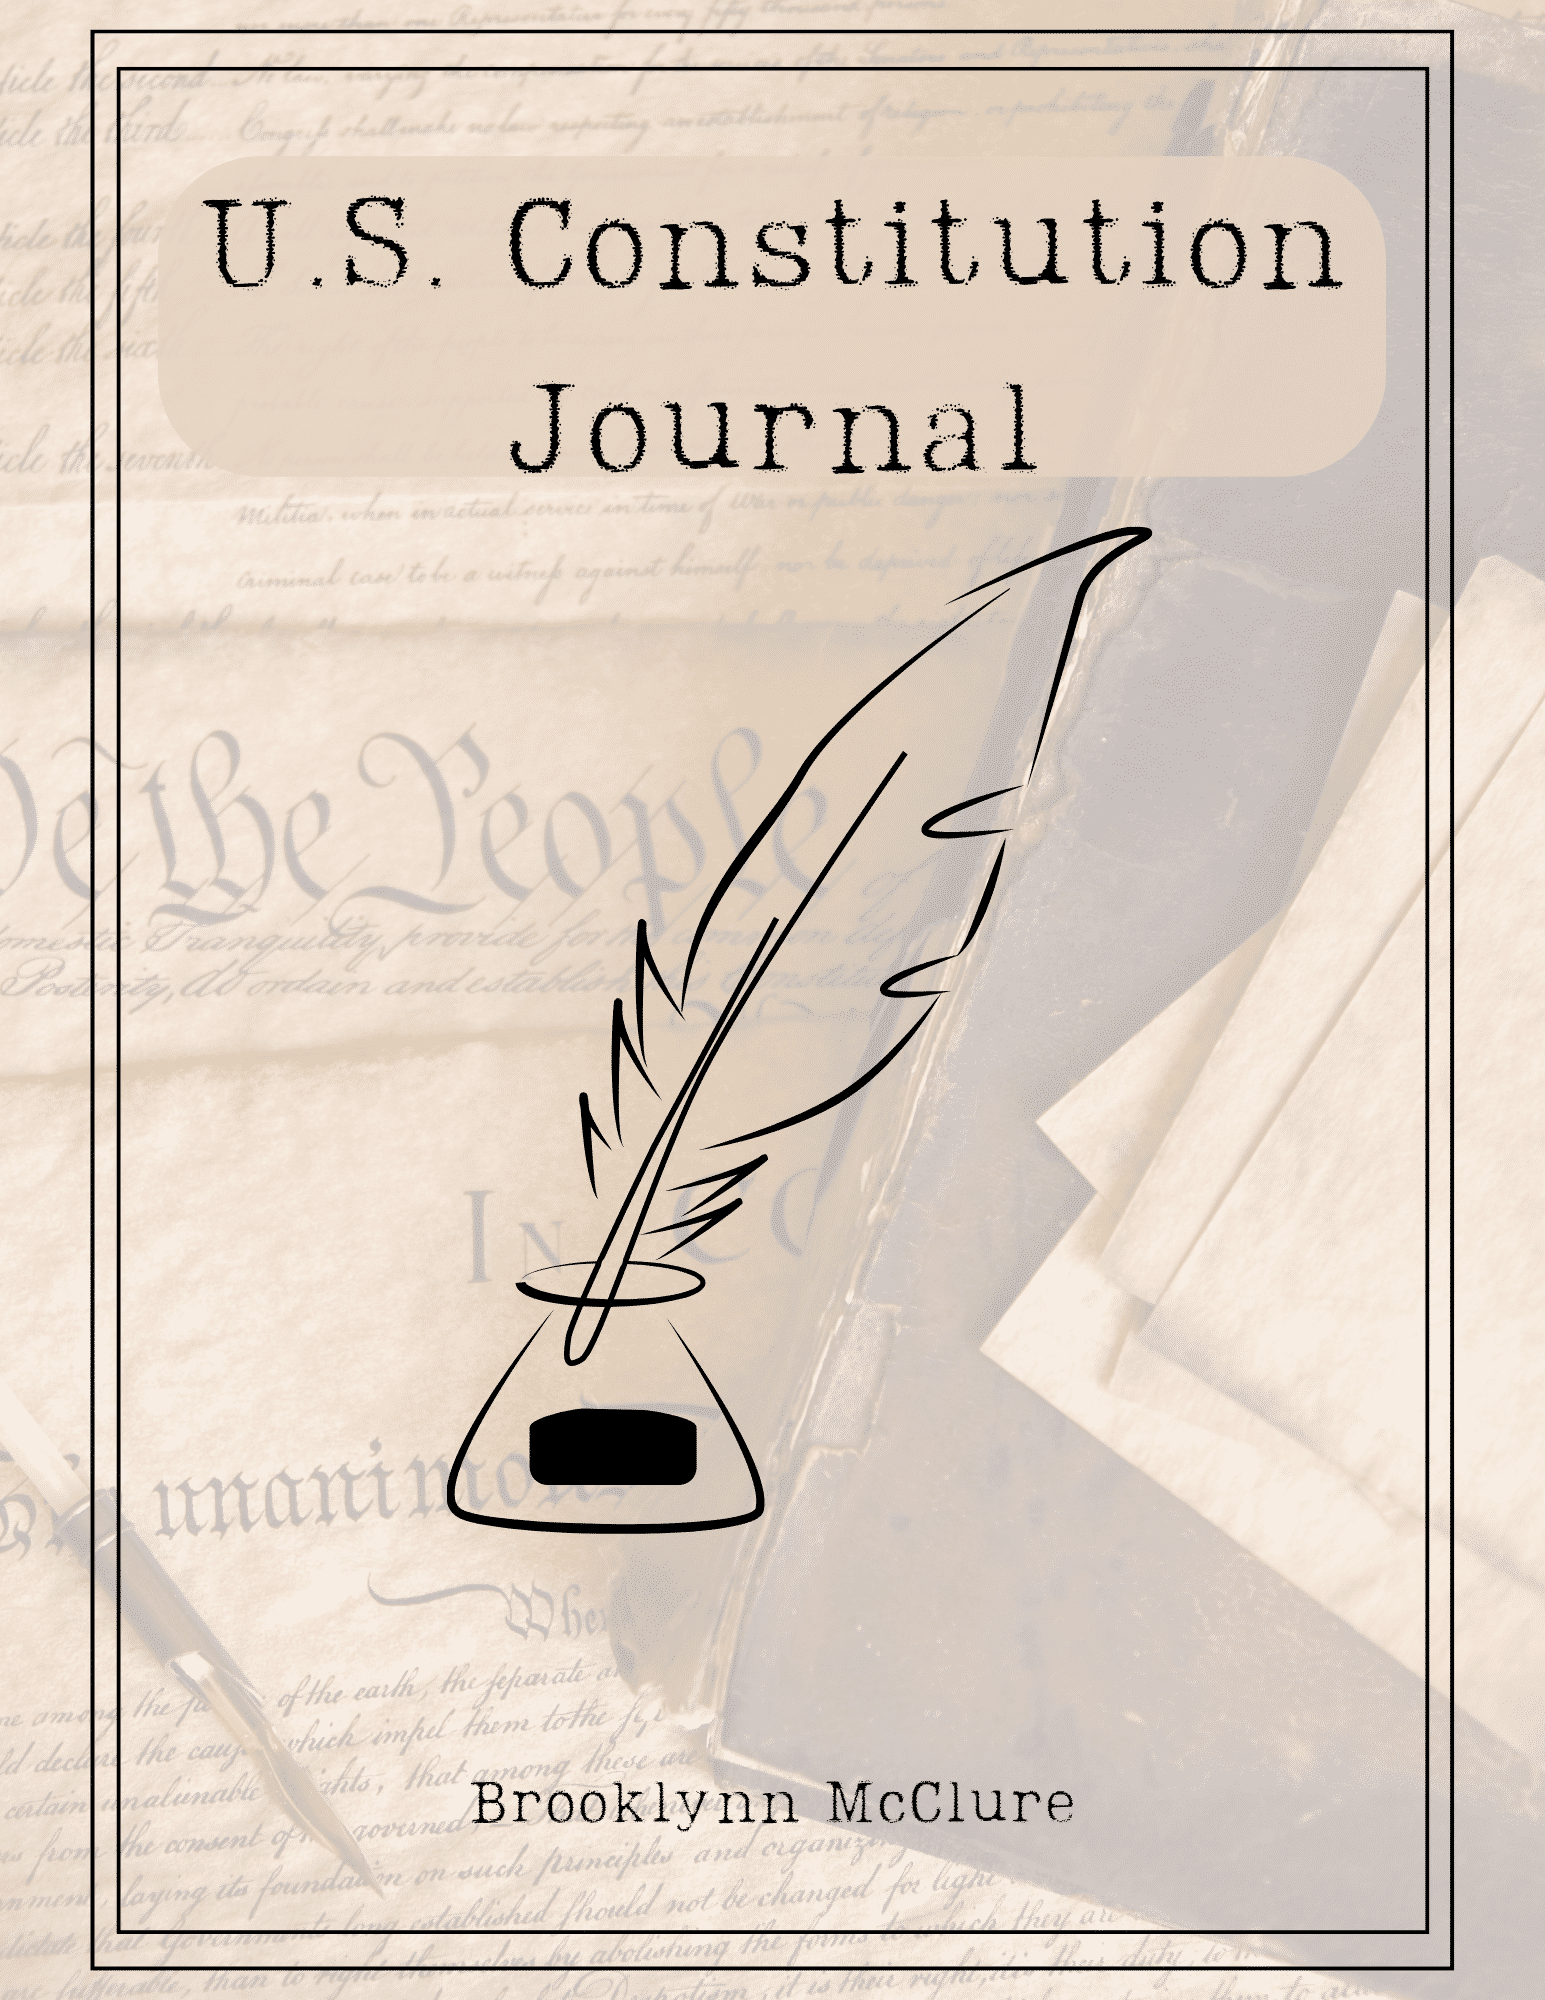 U.S. Constitution Journal